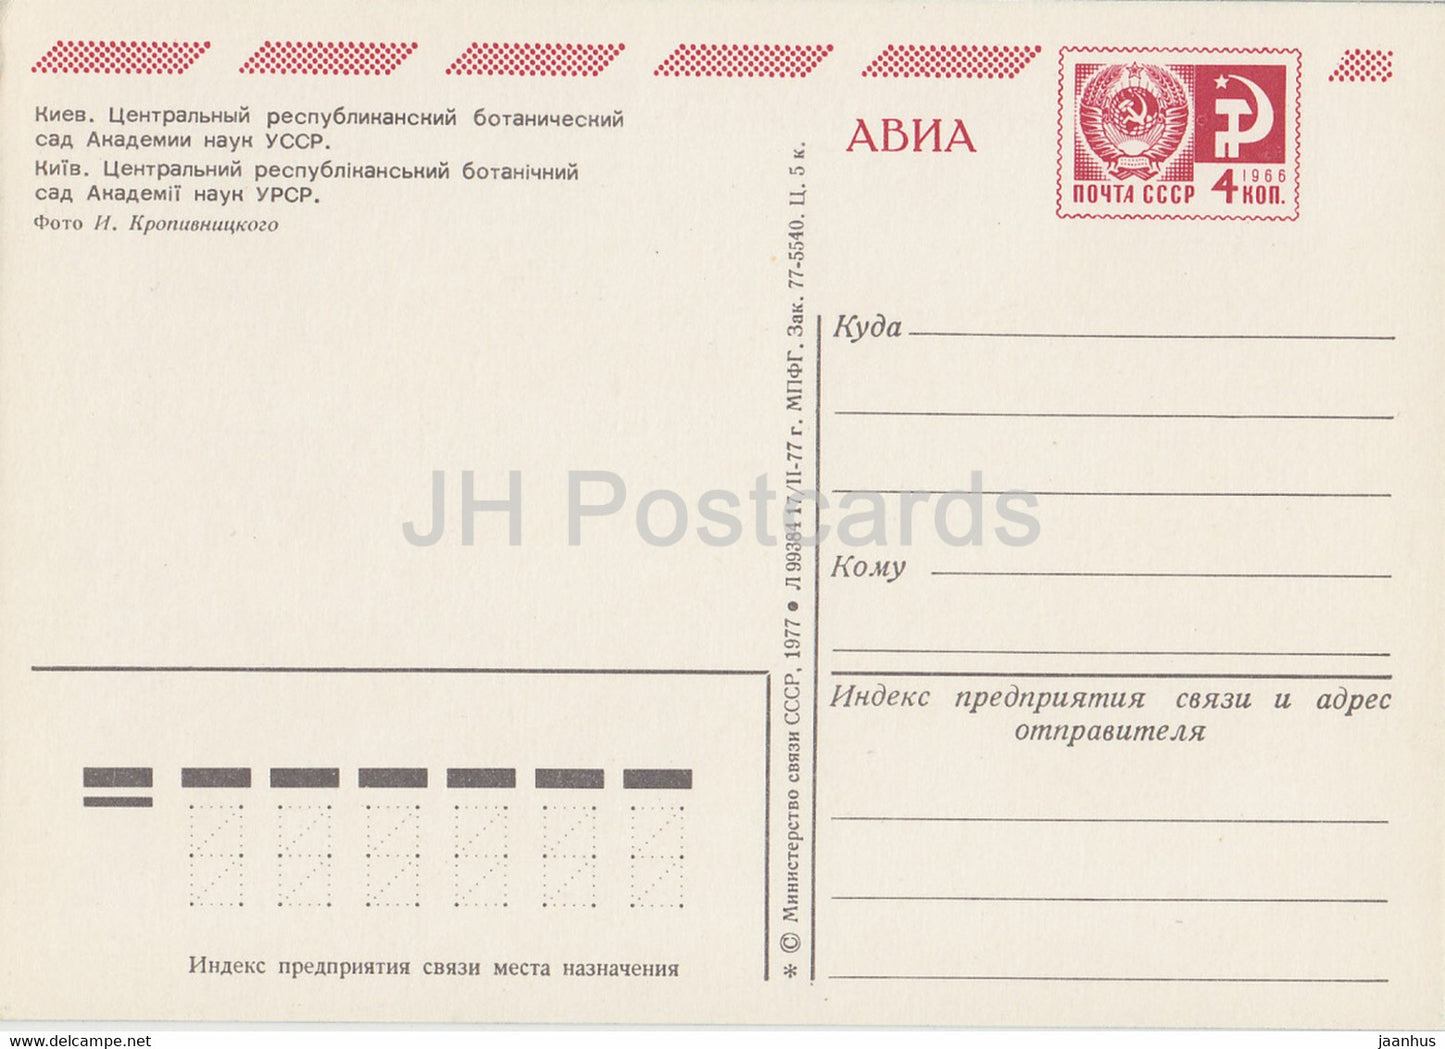 Kiev - Kiev - Jardin Botanique Central - AVIA - entier postal - 1977 - Ukraine URSS - inutilisé